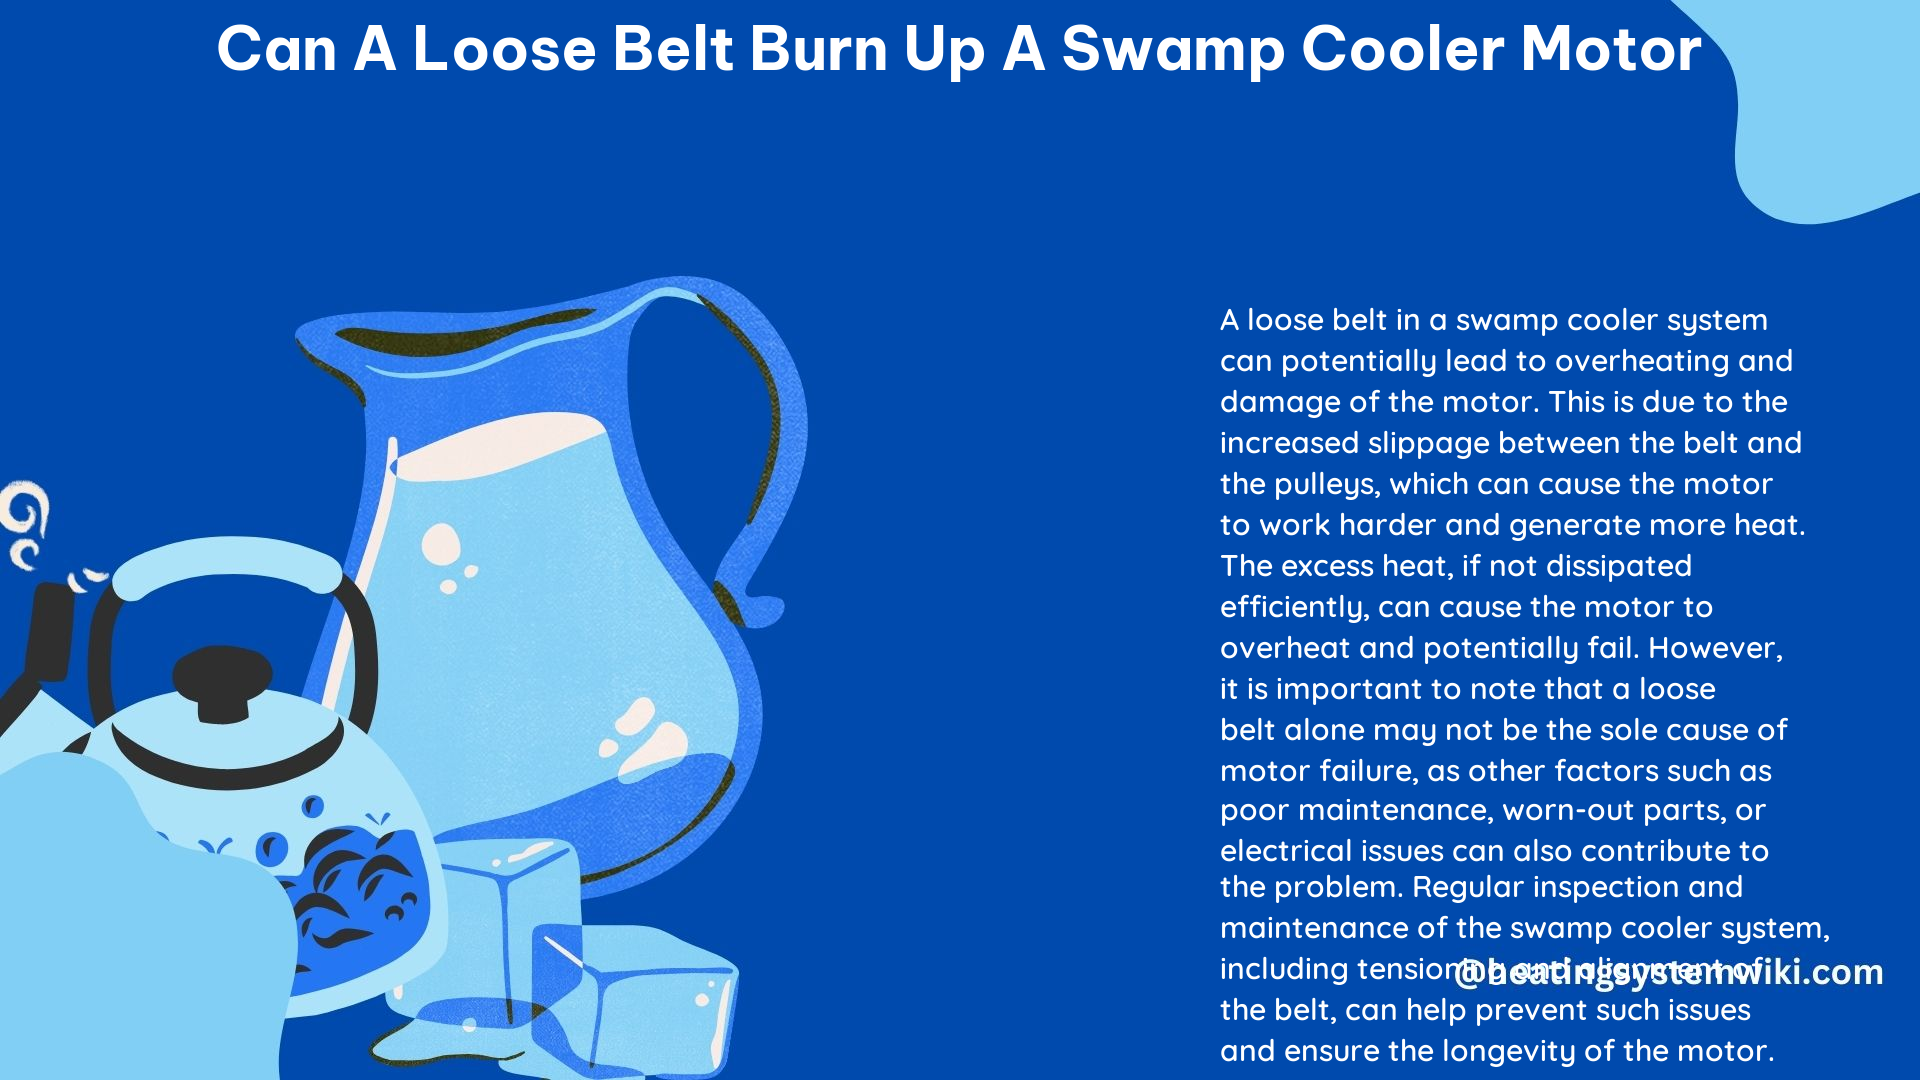 Can a Loose Belt Burn up a Swamp Cooler Motor